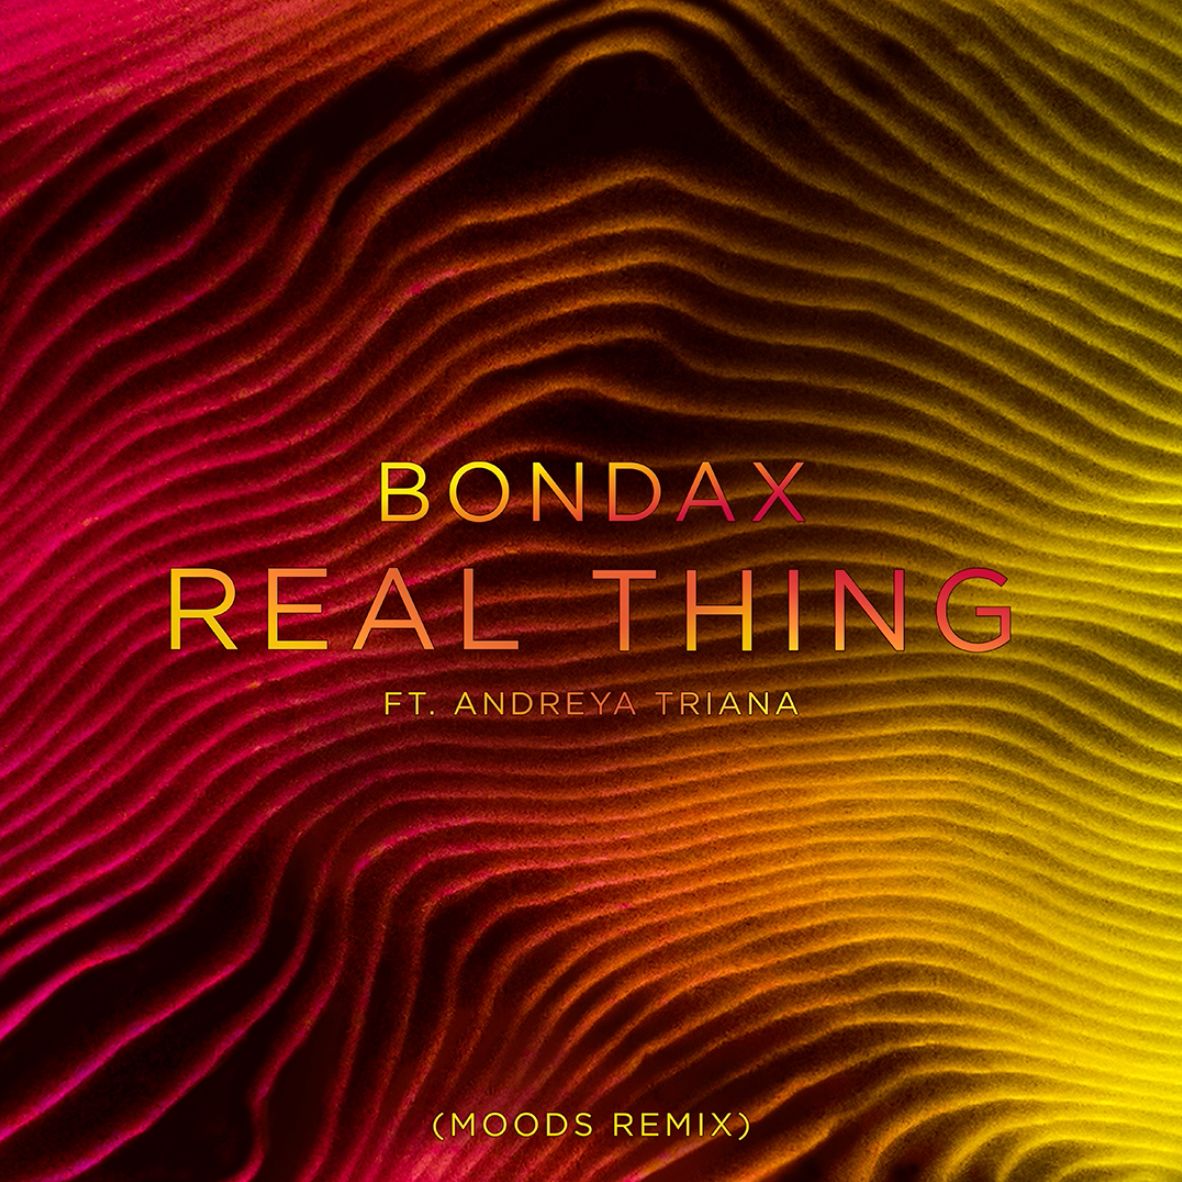 Landa Bondax - Real Thing ft. Andreya Triana (Moods Remix)